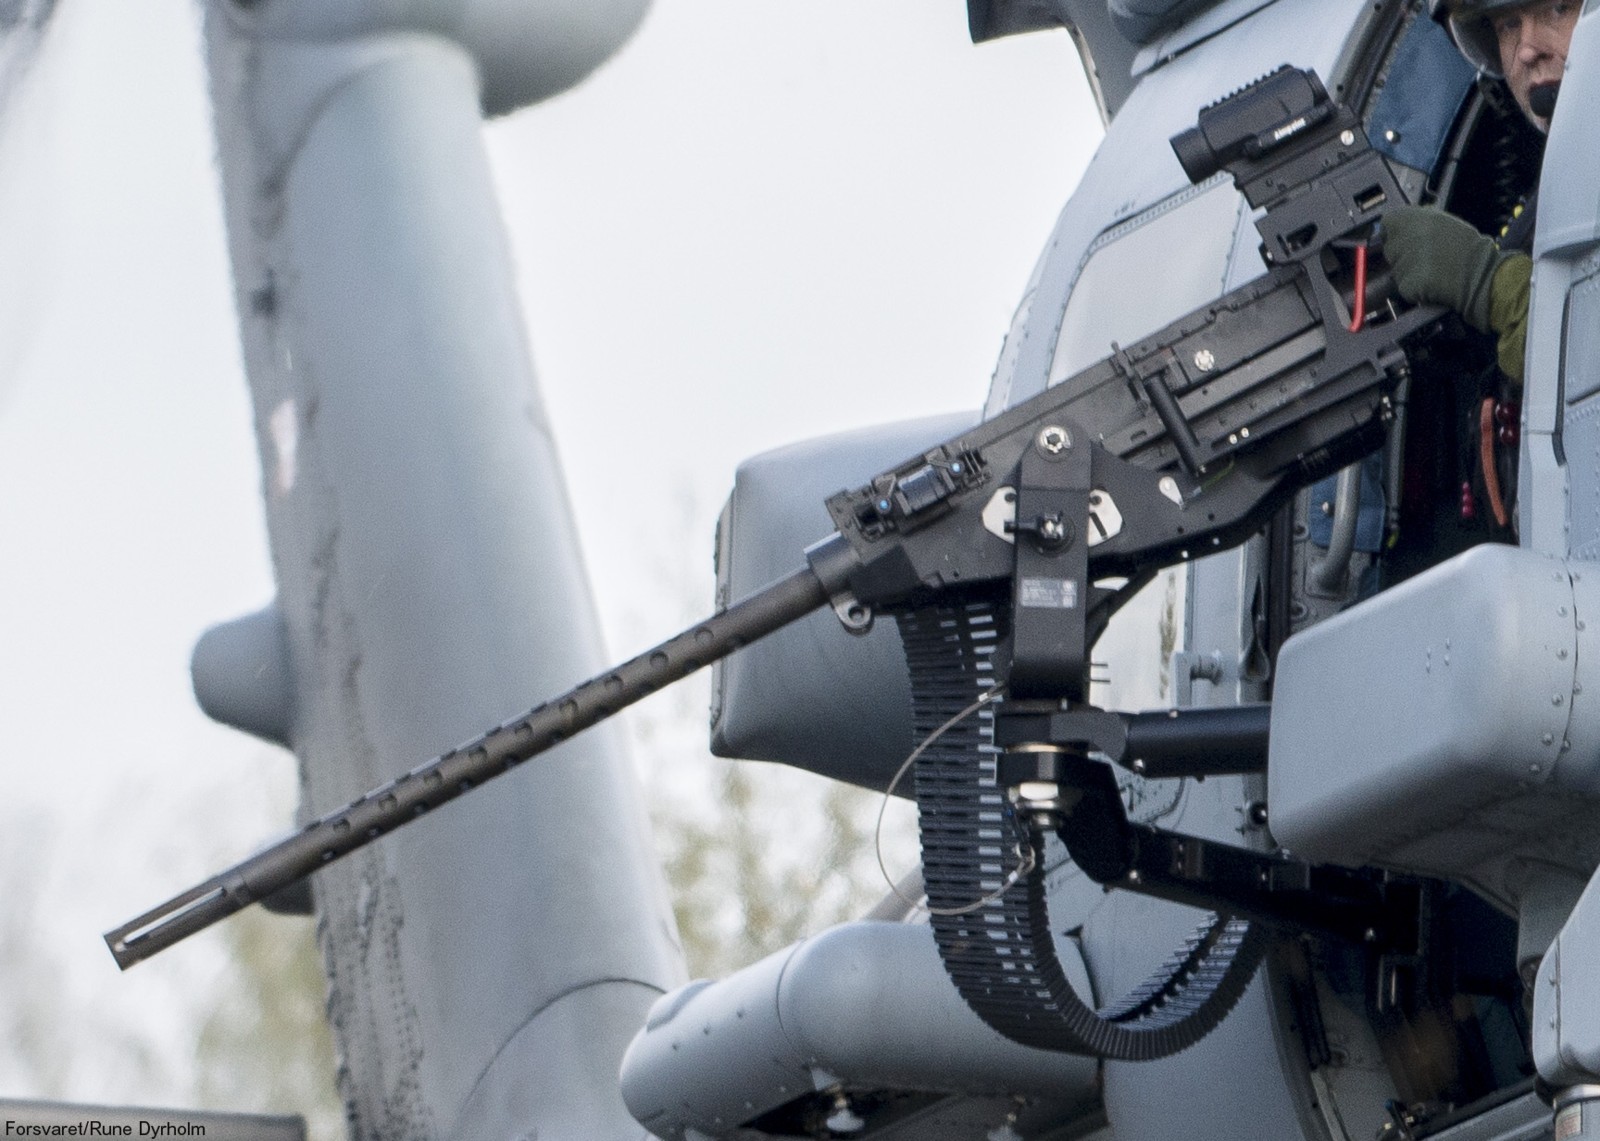 mh-60r seahawk royal danish navy air force flyvevåbnet kongelige danske marine sikorsky helicopter browning m2 machine gun 21a